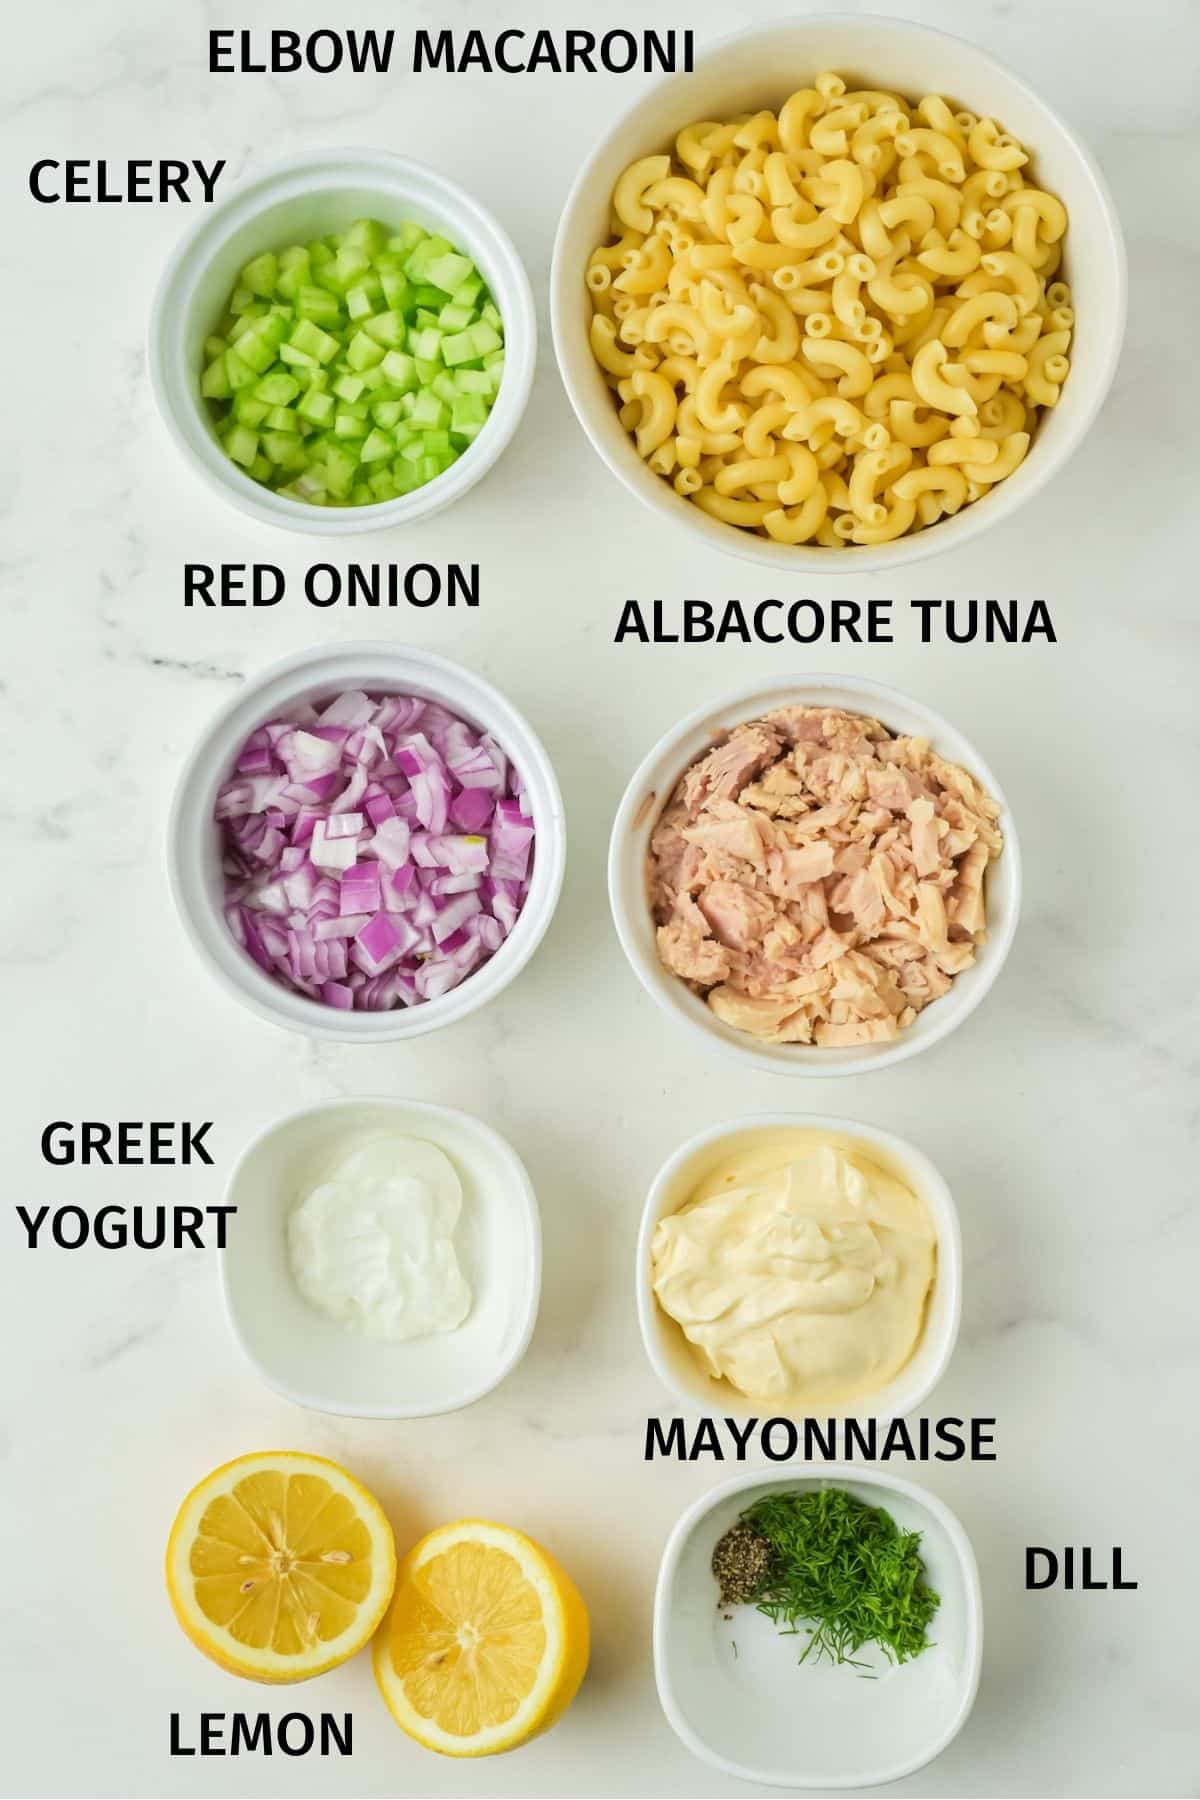 elbow macaroni, celery, red onion, tuna,  yogurt, mayonnaise, and dill.